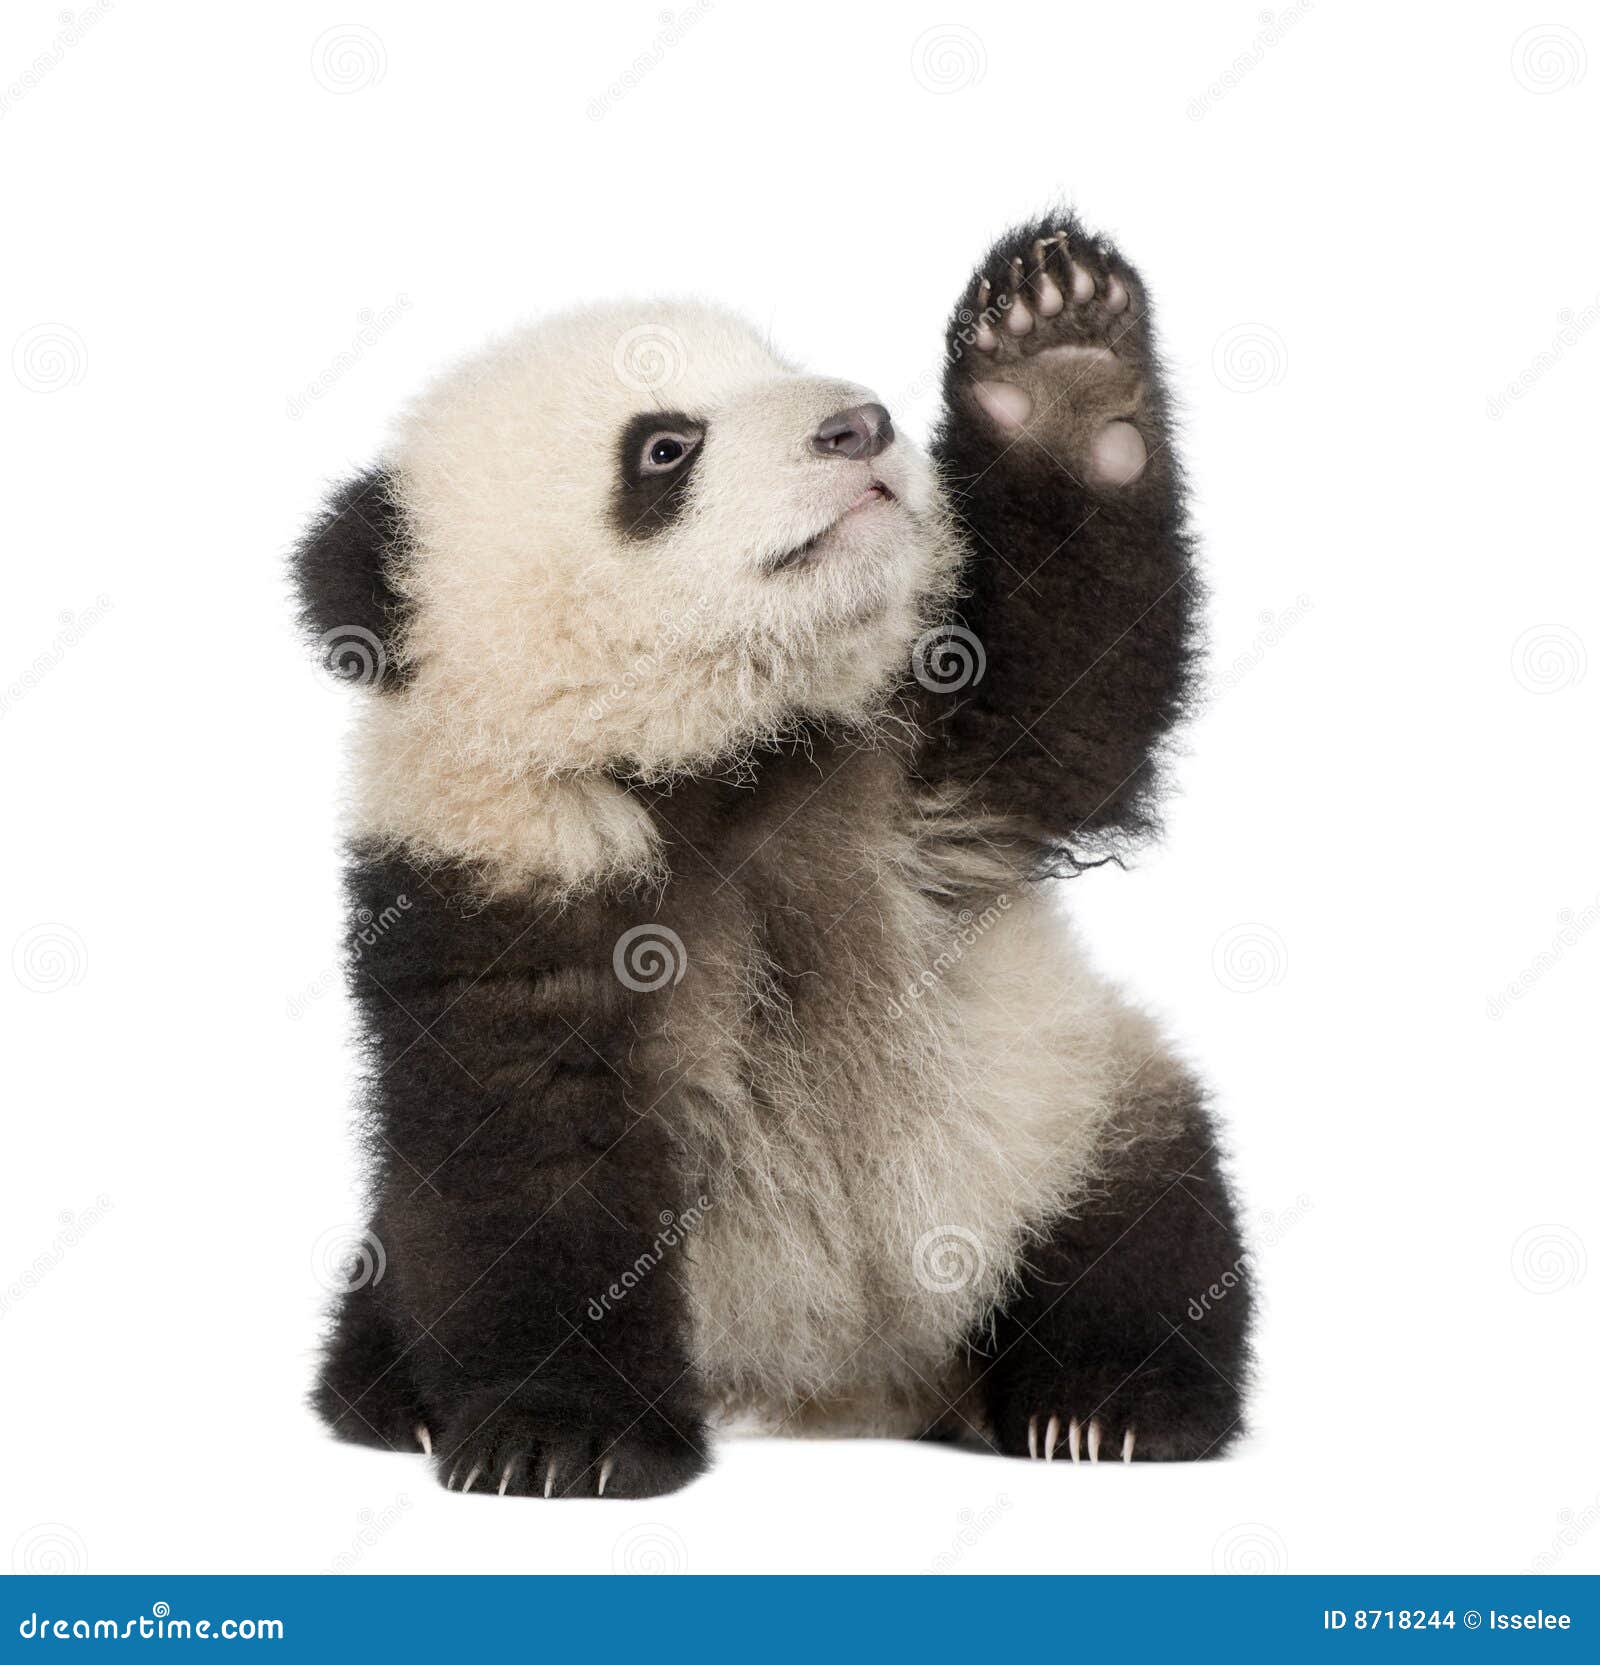 giant panda (6 months) - ailuropoda melanoleuca